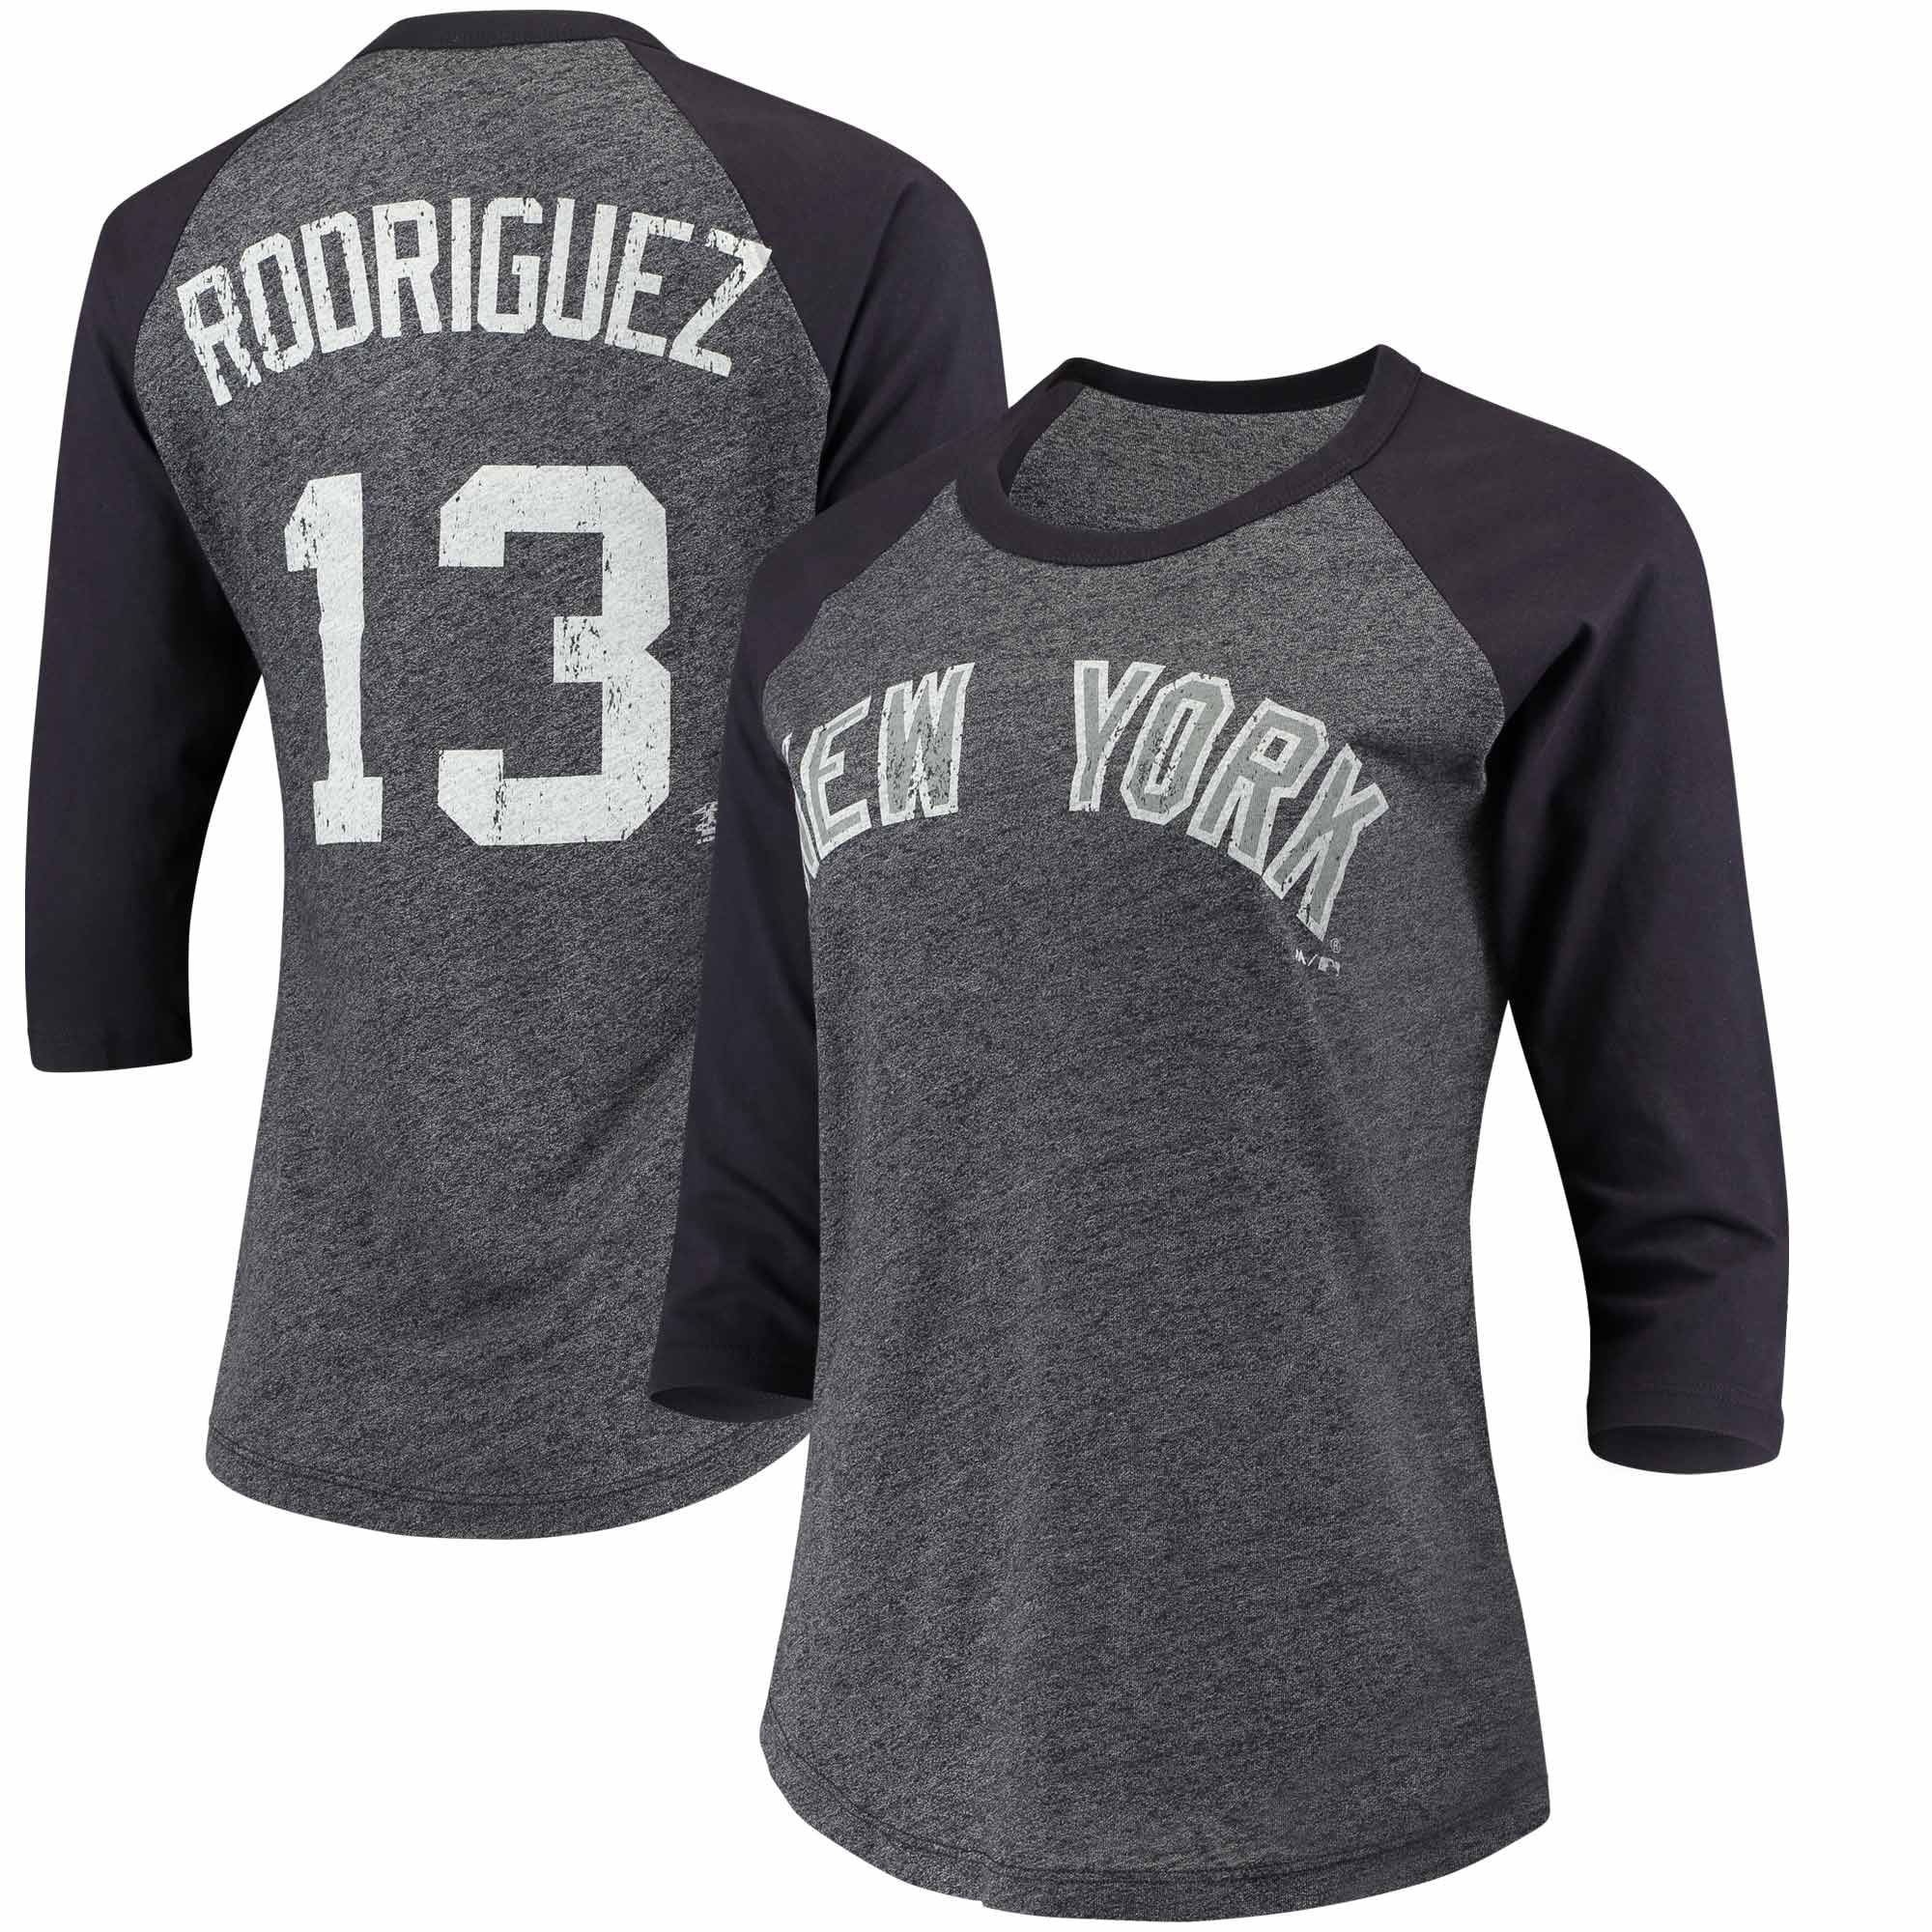 new york yankees jersey alex rodriguez